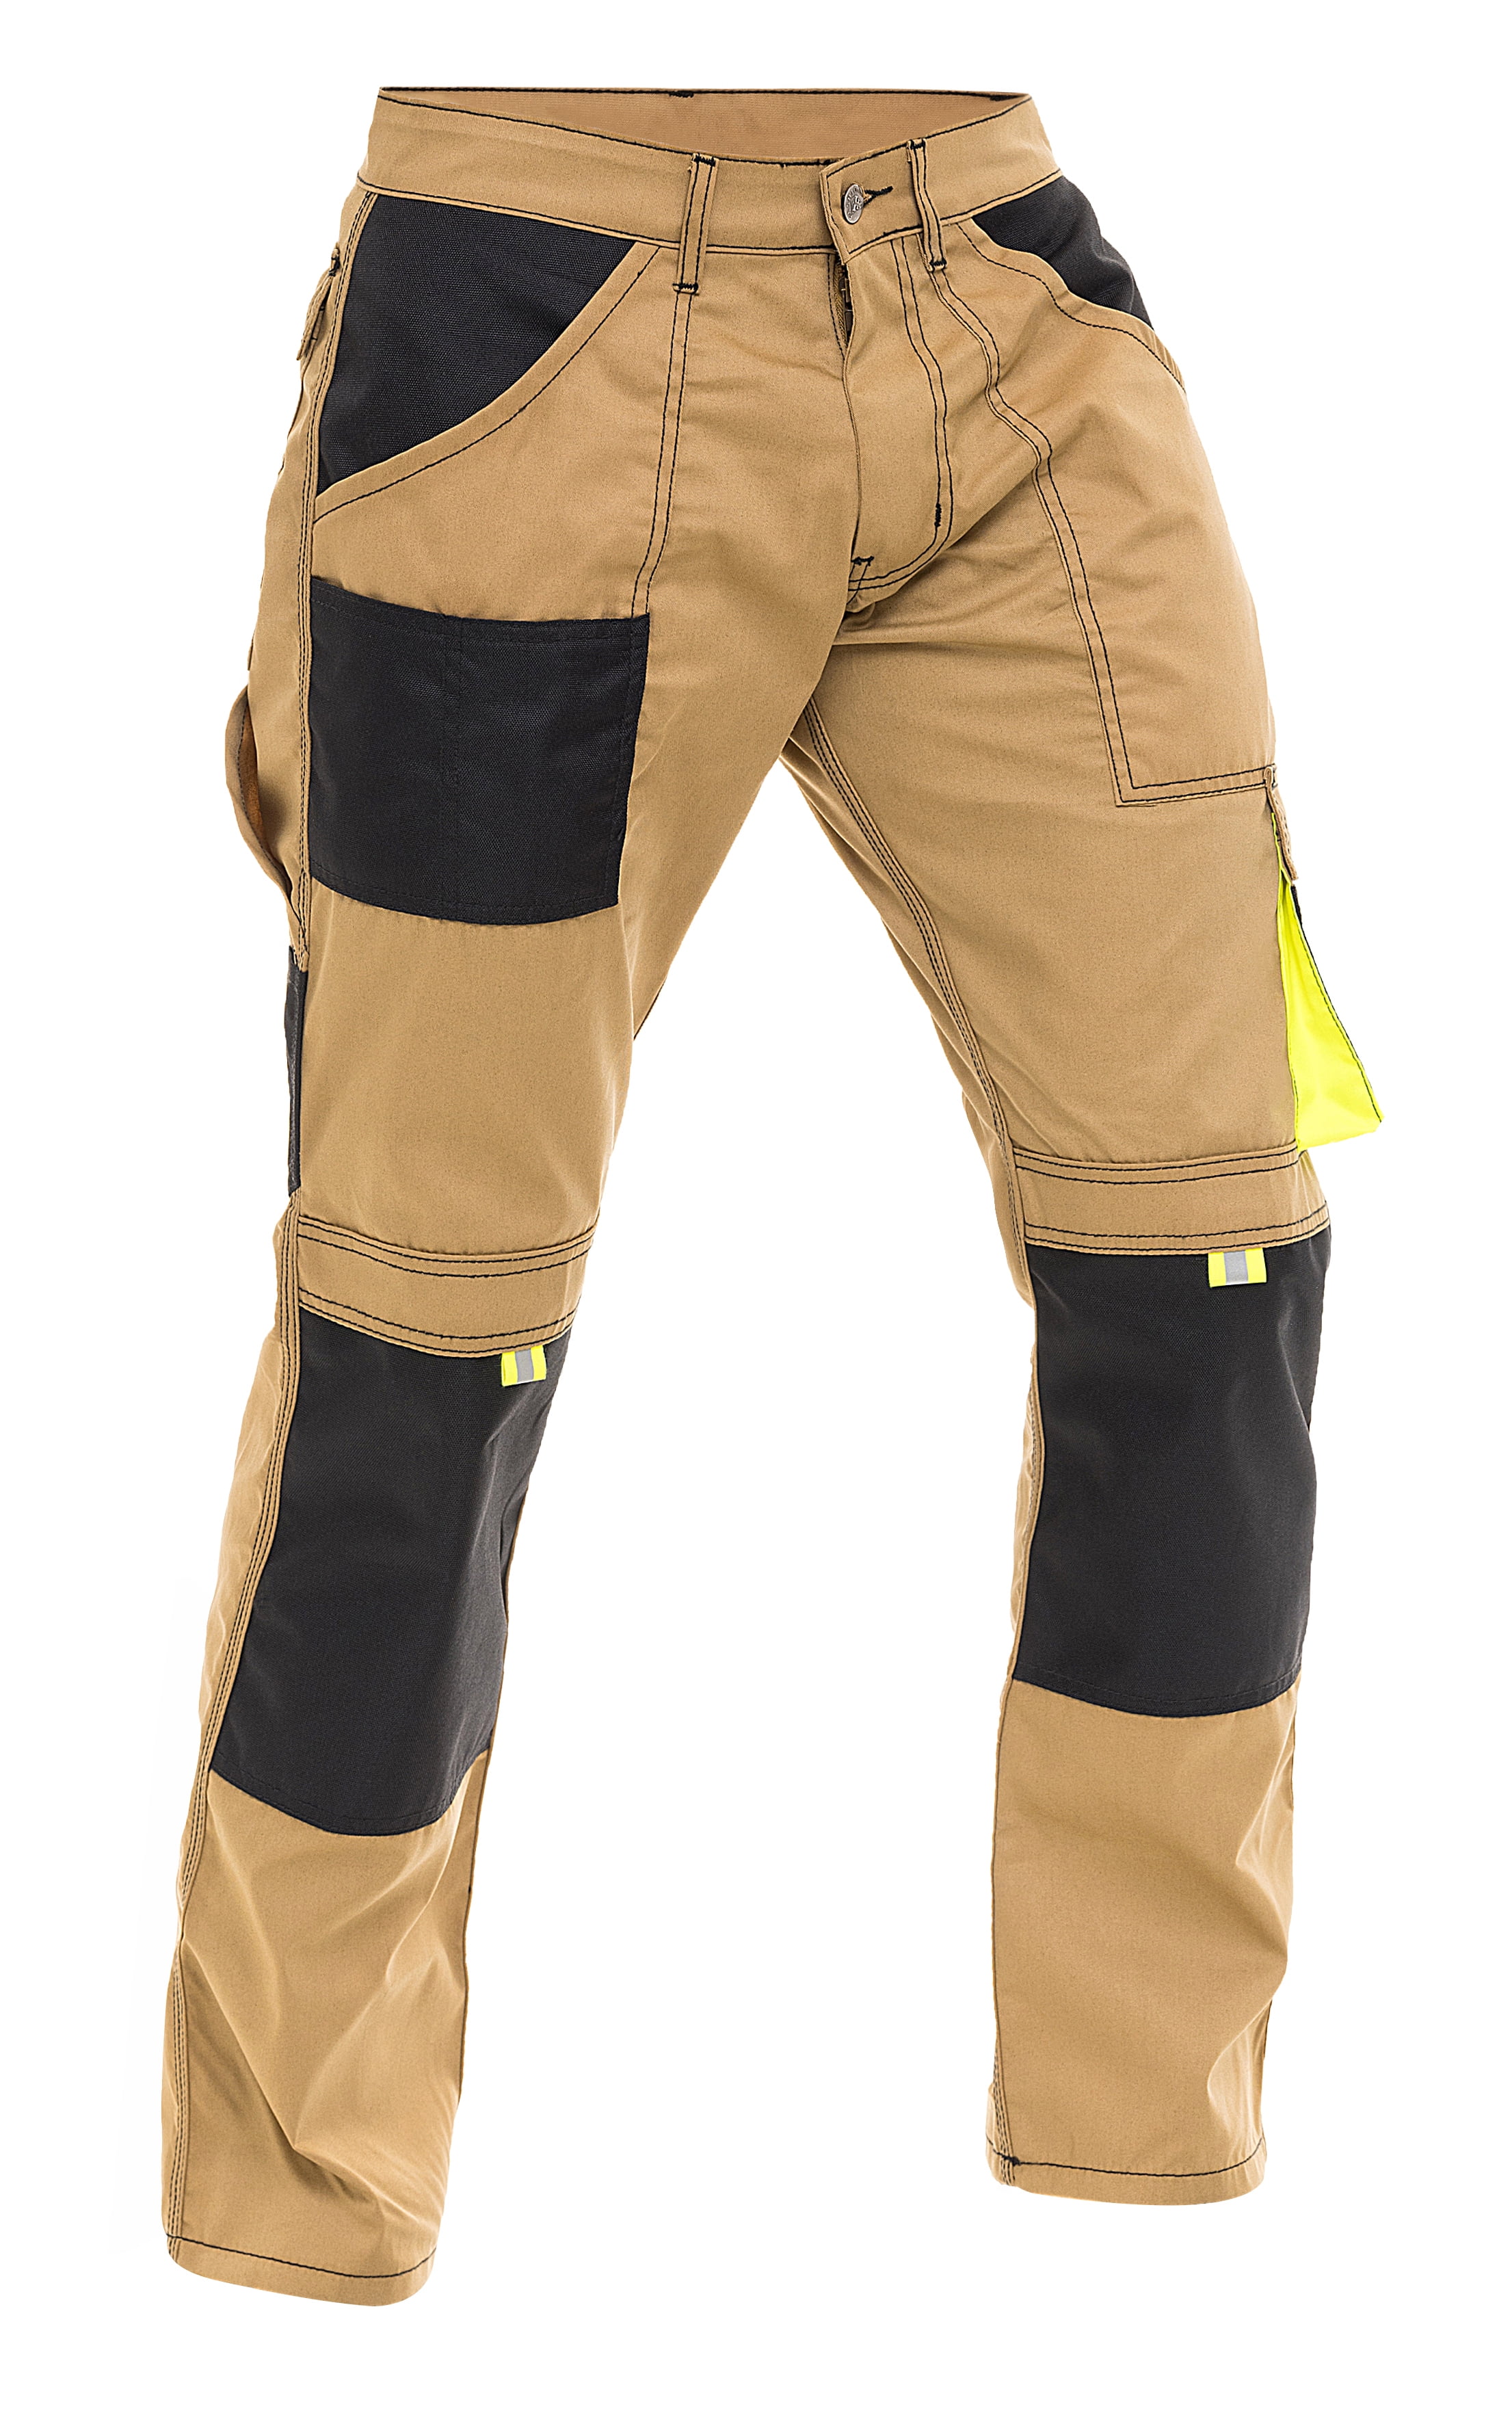 Buy Newfacelook Mens Cargo Pants Khaki Black Grey Cordura Utility Work  Safety Trousers Knee Pad Pockets at Amazonin